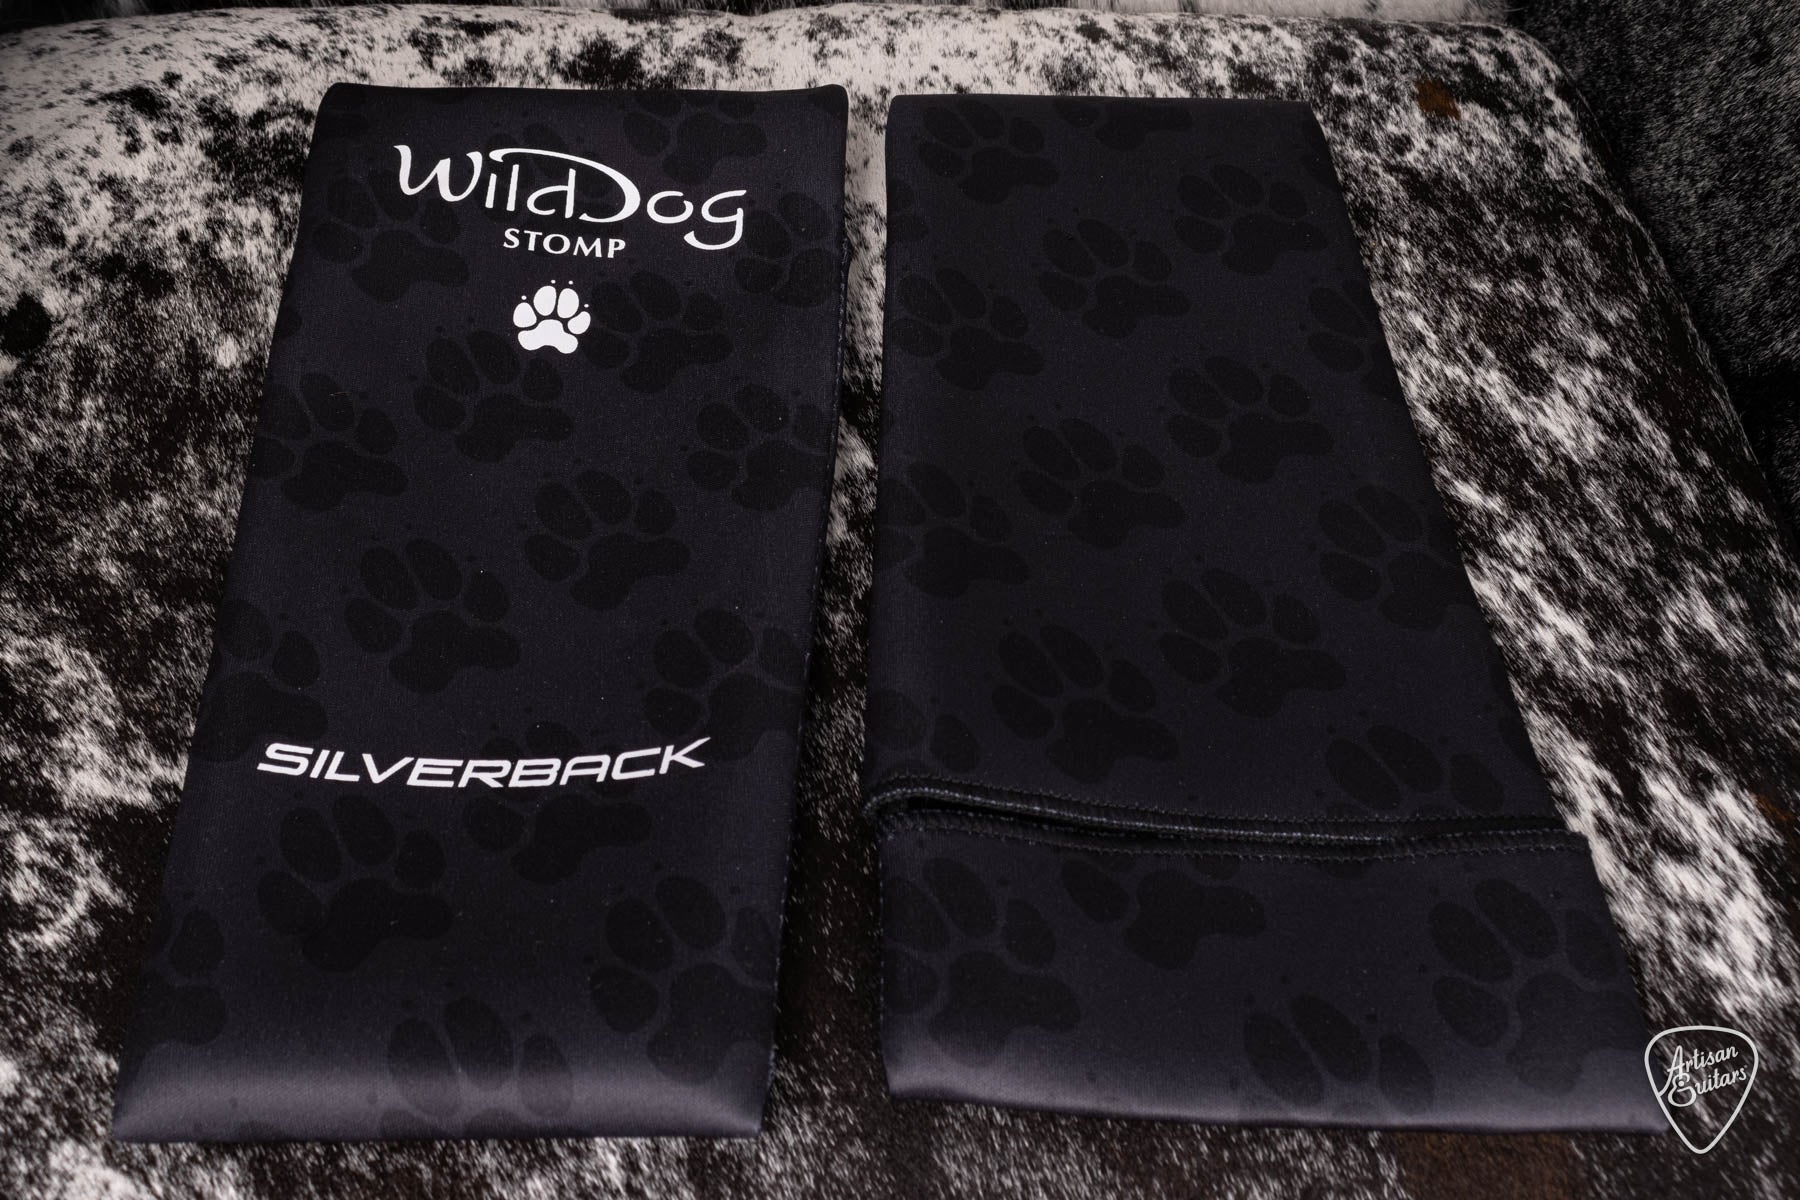 Wild Dog Silverback Stomp Box with Jingles - WD-711023